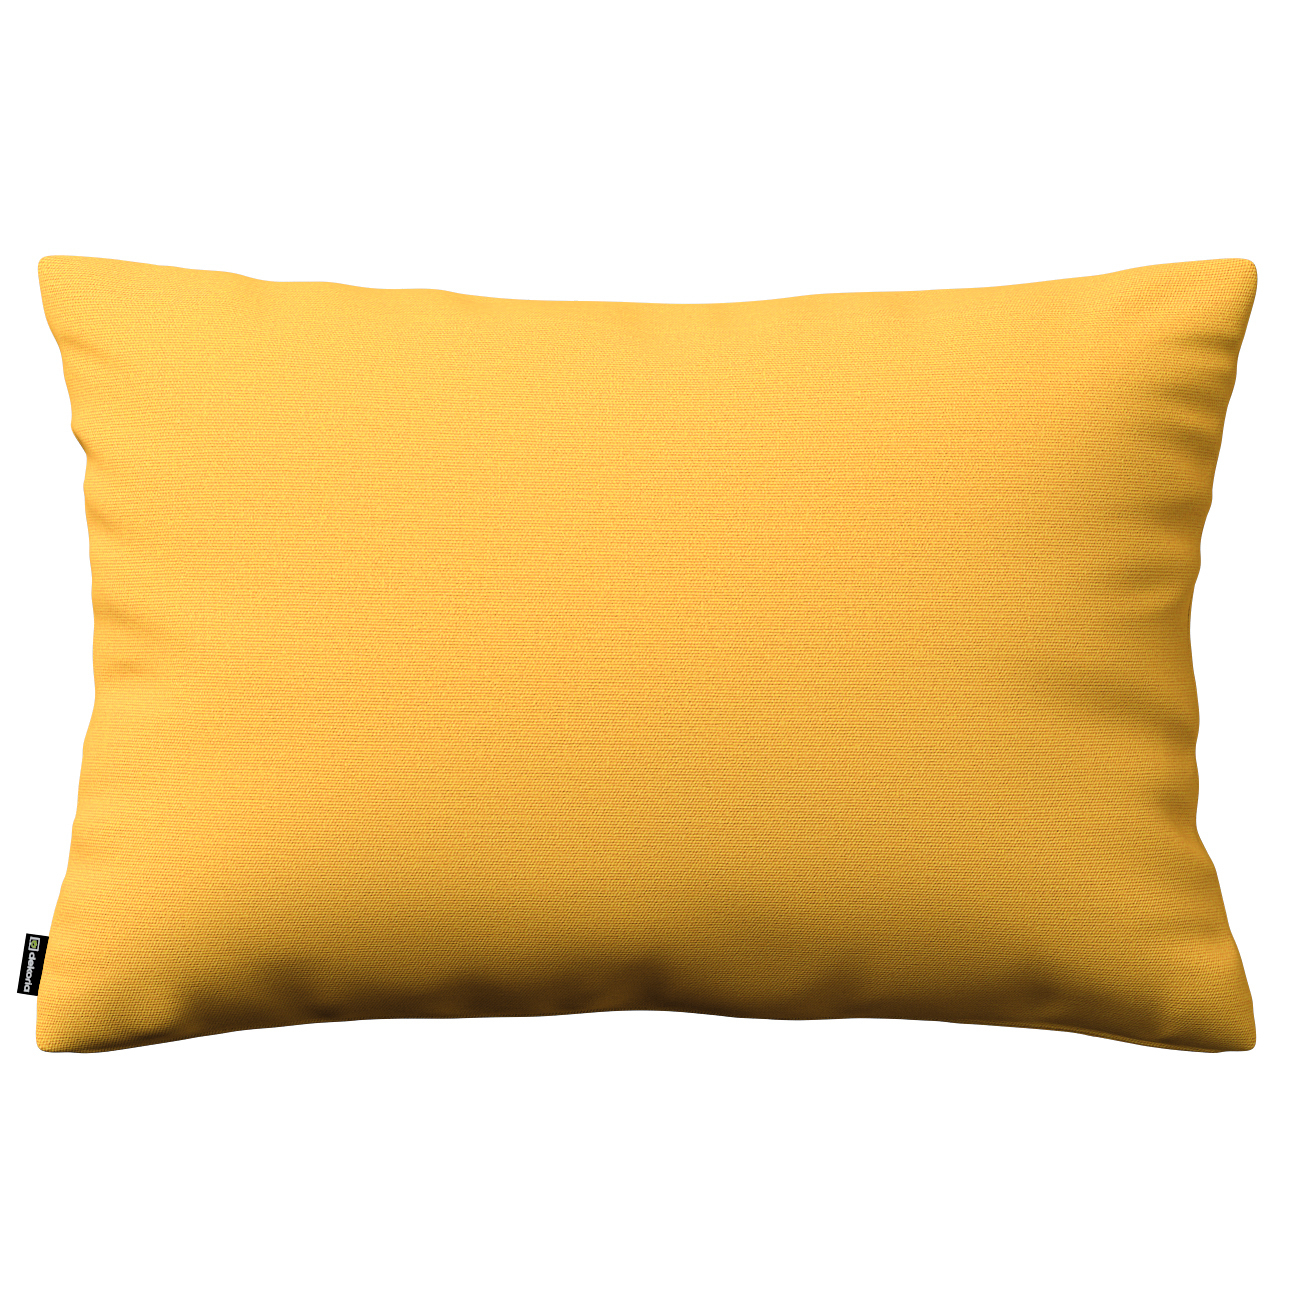 Kissenhülle Kinga rechteckig, gelb, 60 x 40 cm, Loneta (133-40) günstig online kaufen